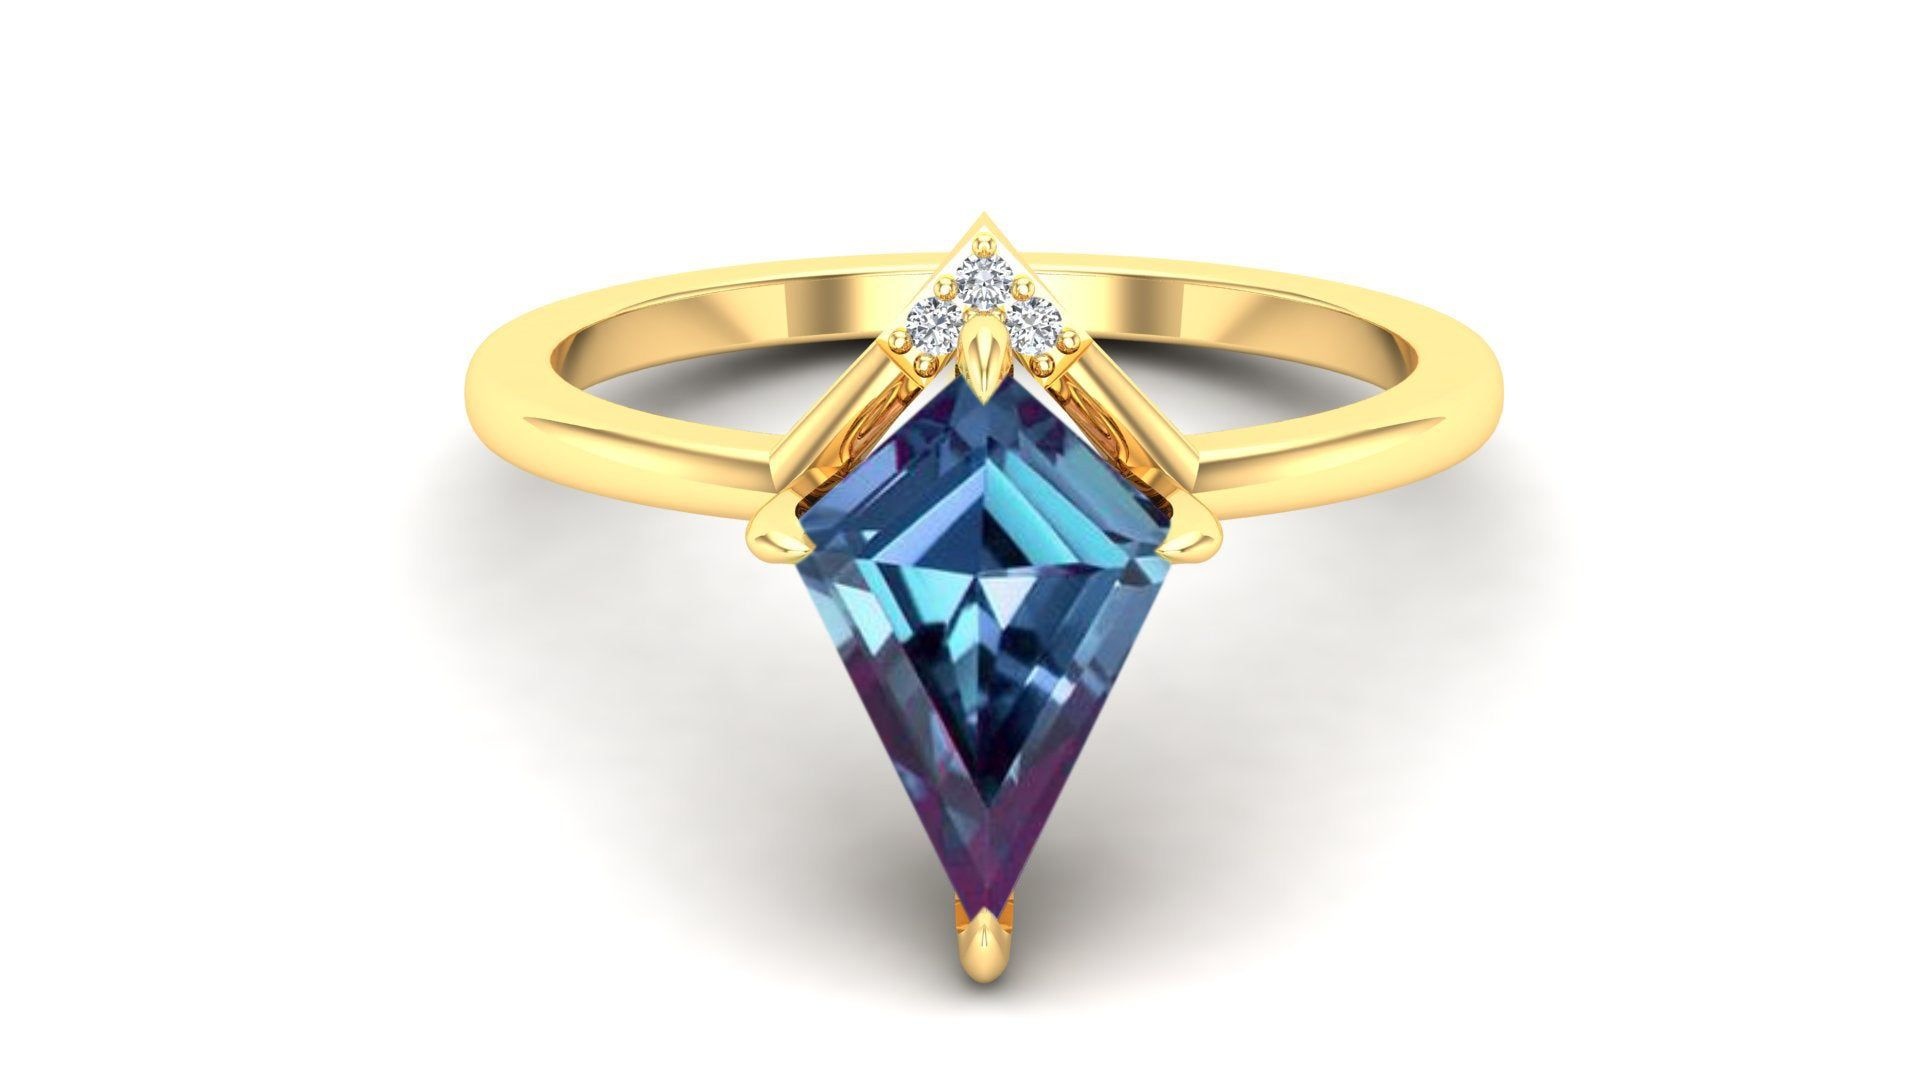 Alexandrite gemstone, Engagement ring, Art Deco bridal, Color stone, 1920x1080 Full HD Desktop